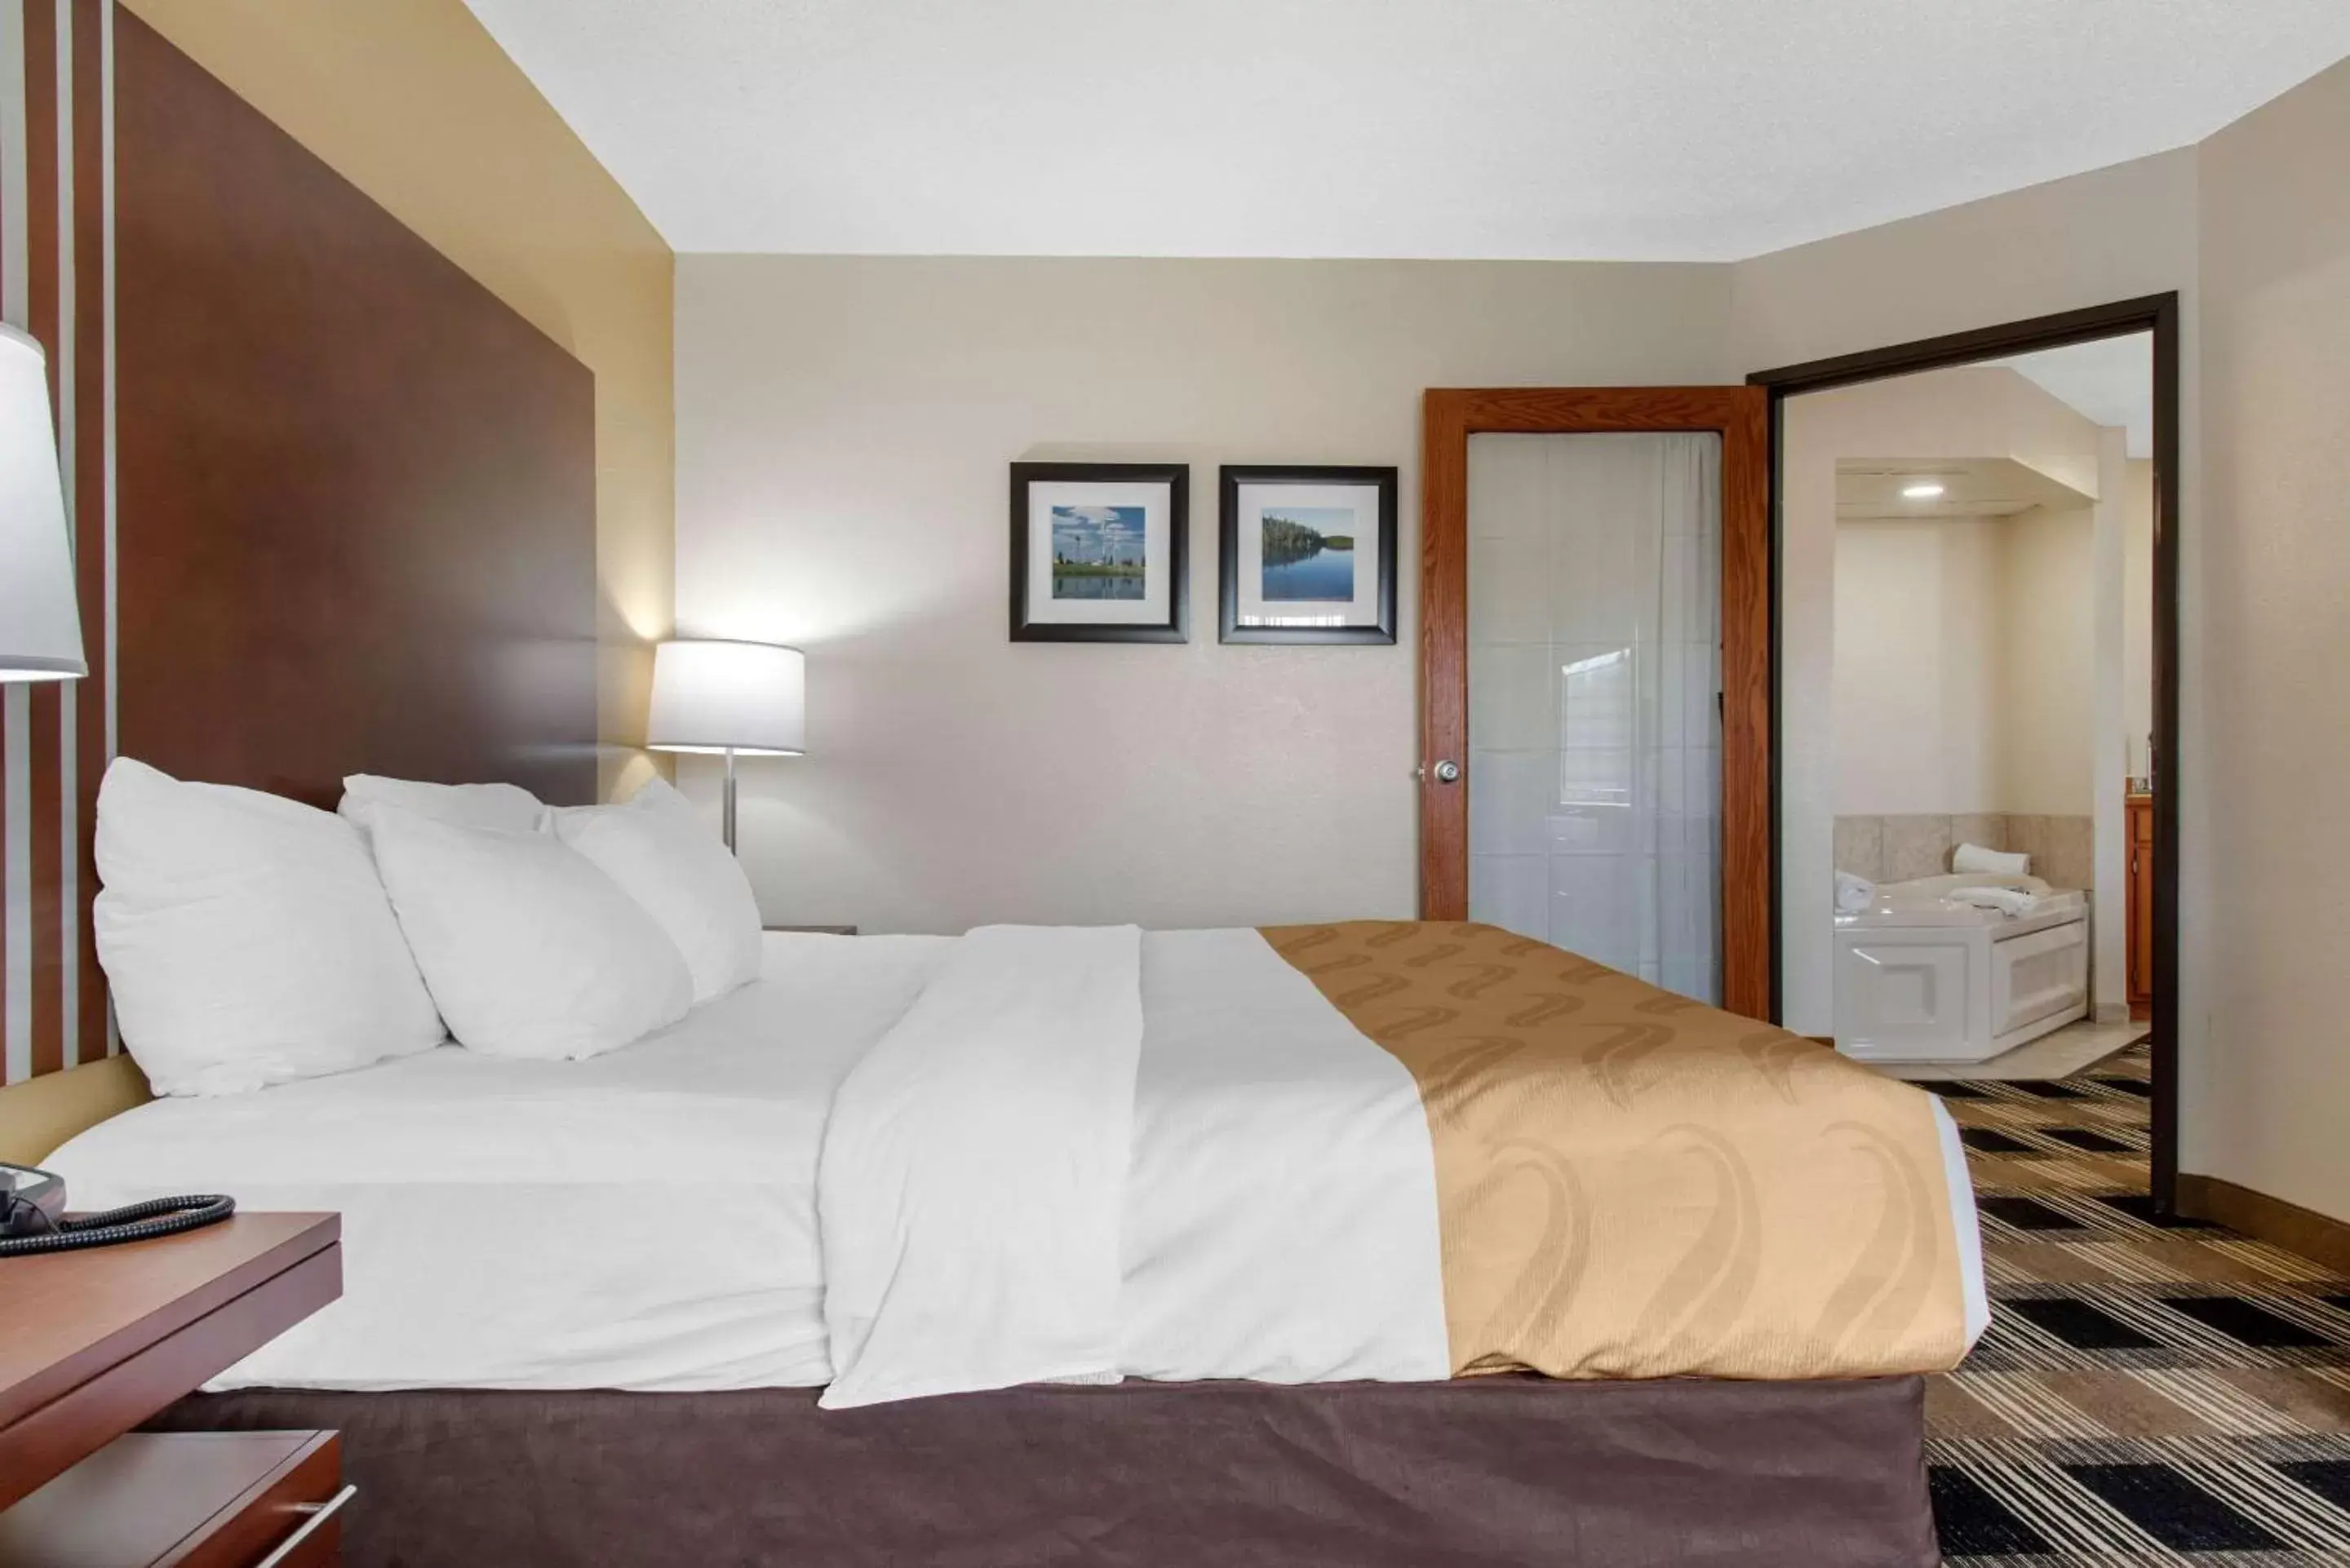 Bedroom, Bed in Quality Inn near Medical Center